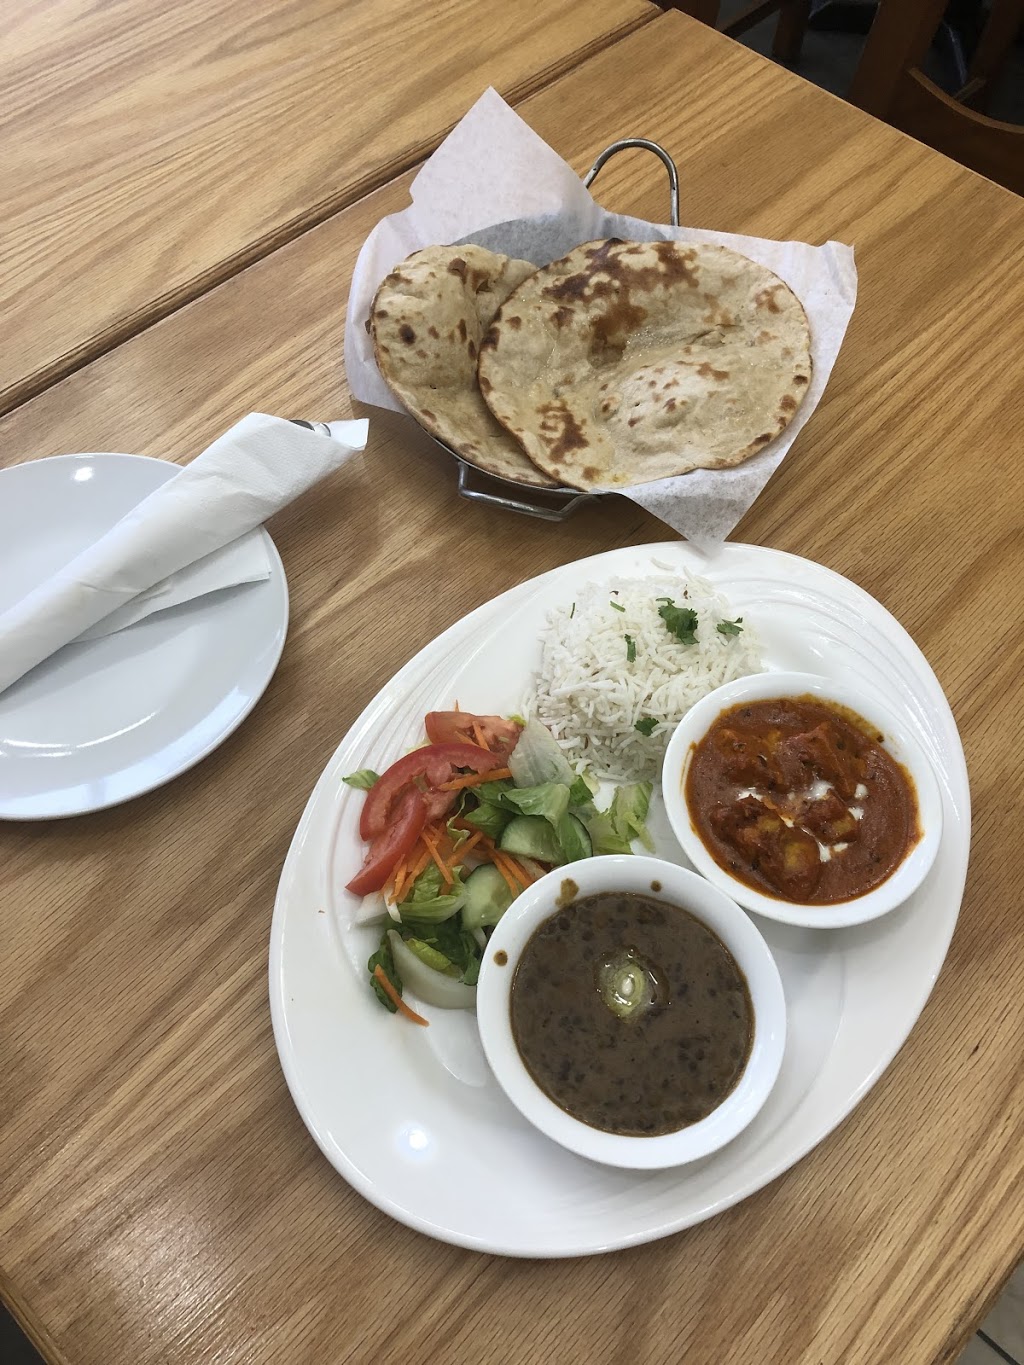 Best Bite Indian Cuisine | 10-3891 Chatham St, Richmond, BC V7E 2Z6, Canada | Phone: (604) 370-4949